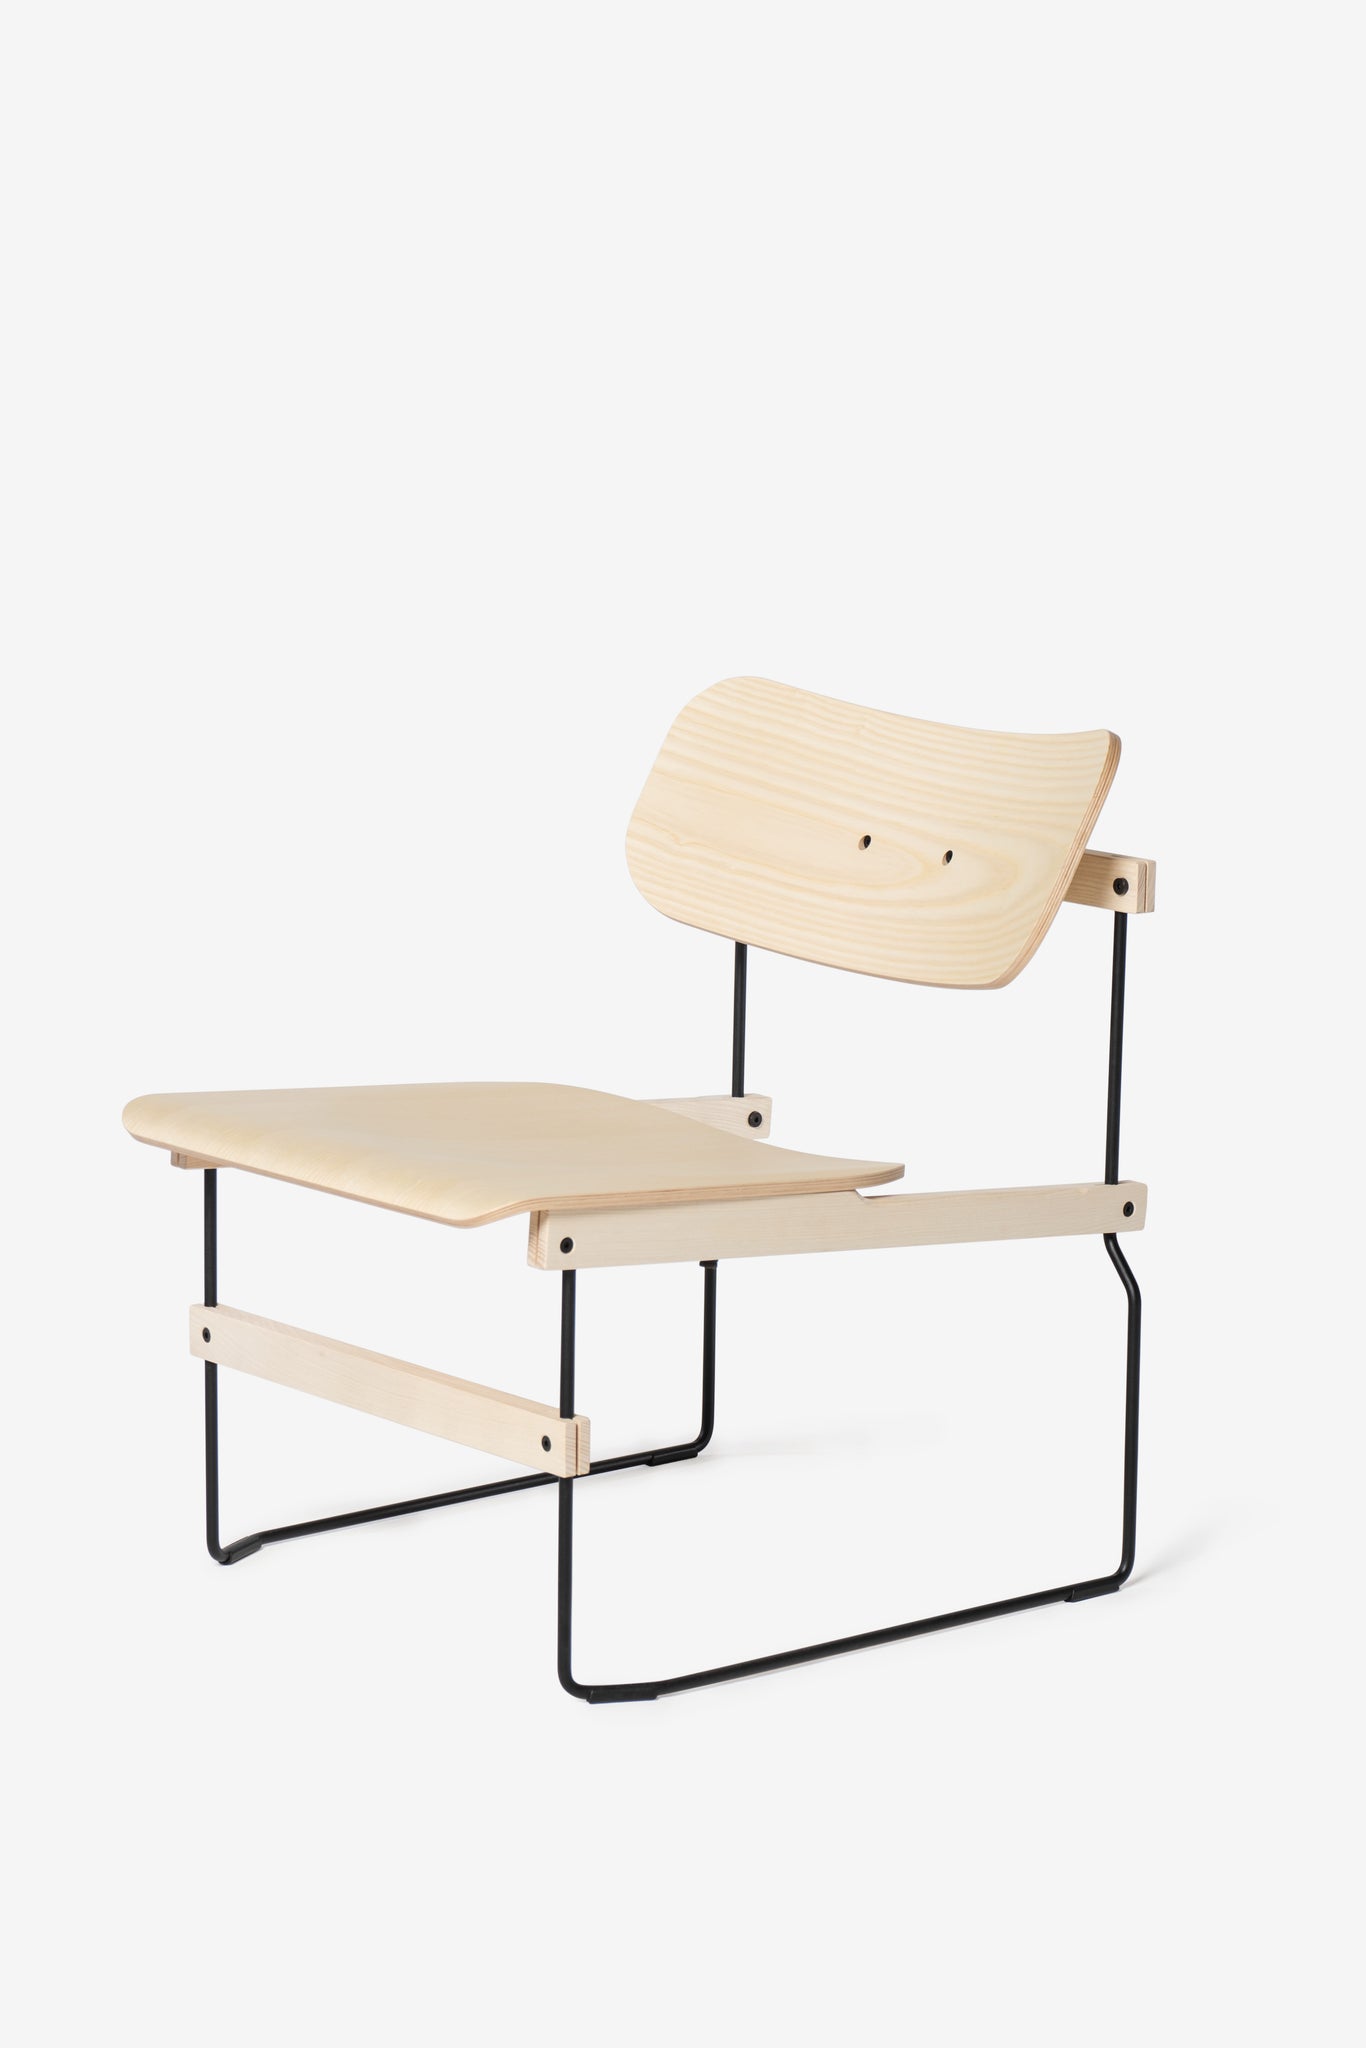 Nils Holger Moormann Brutissimo Sessel Lounge Chair Holz Metall Designer minimalistisch